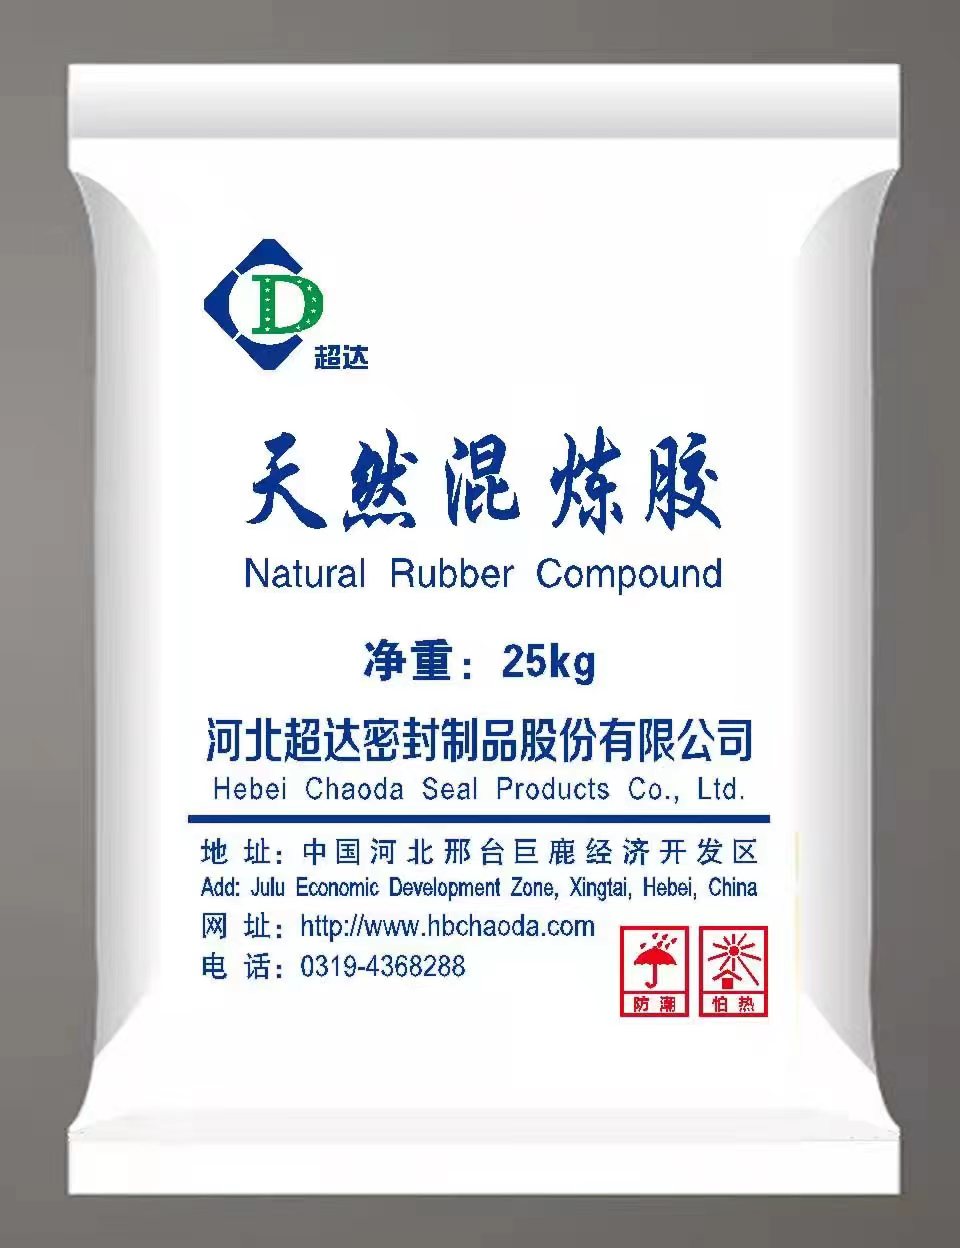 Natural rubber compound